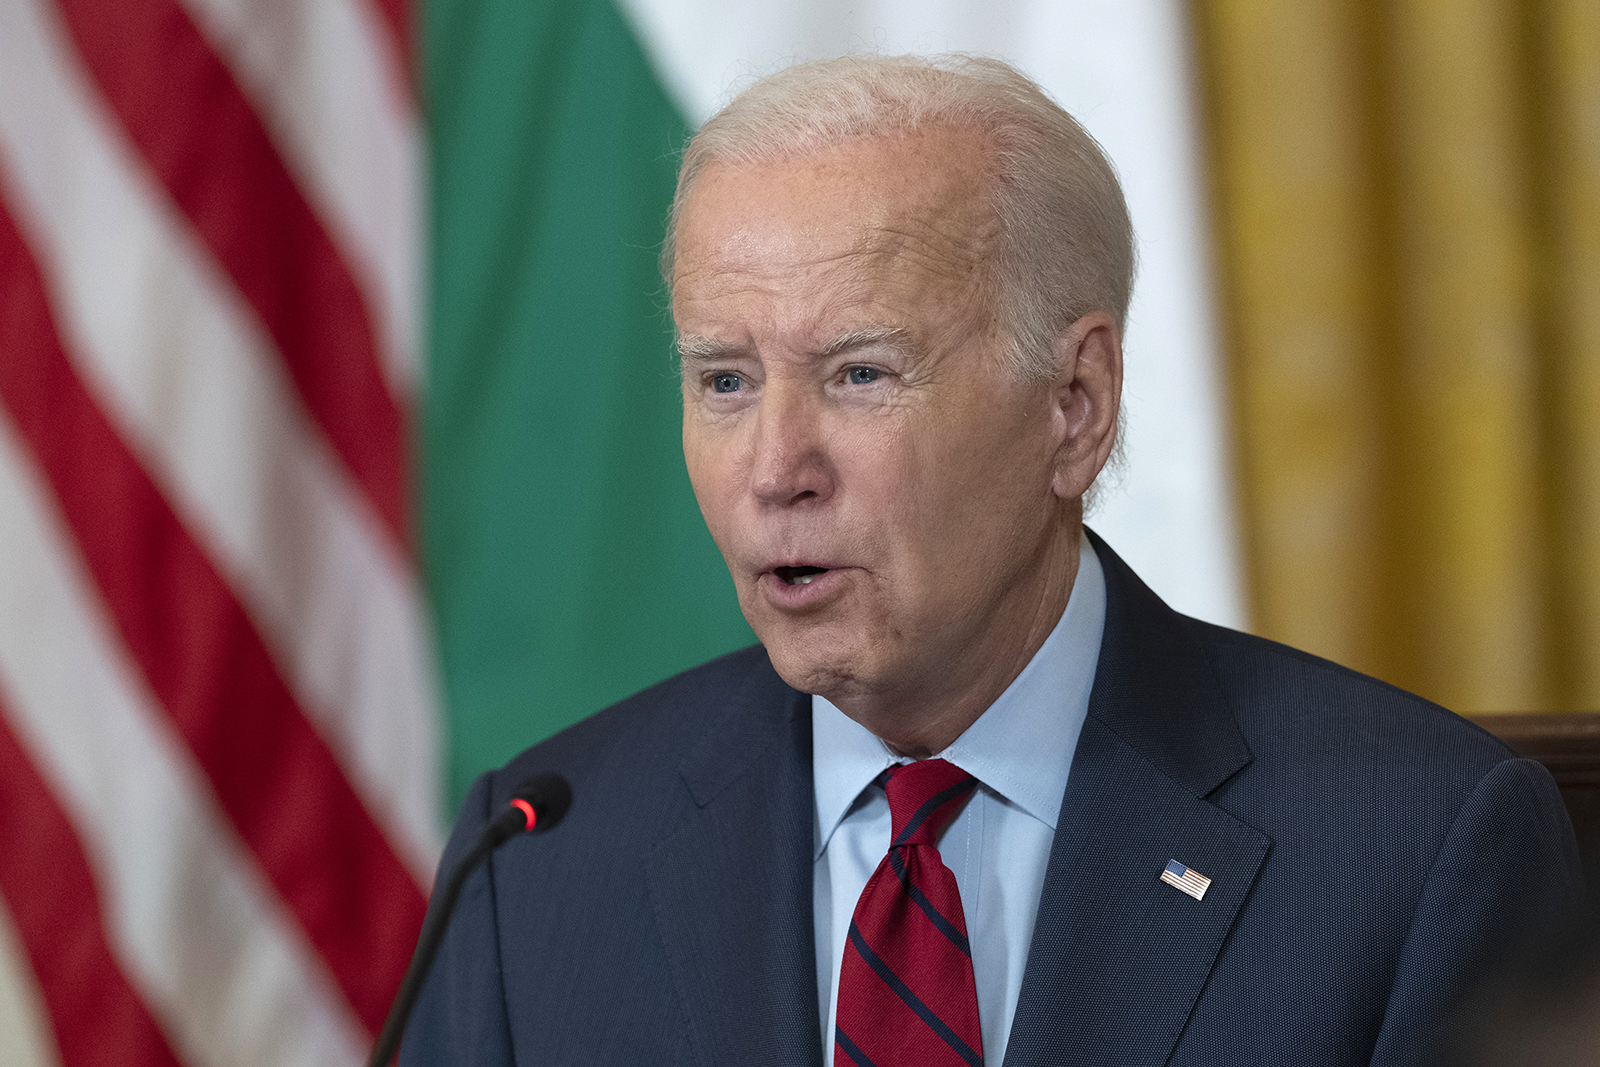 Joe Biden during an event in Washington, DC, on June 22.